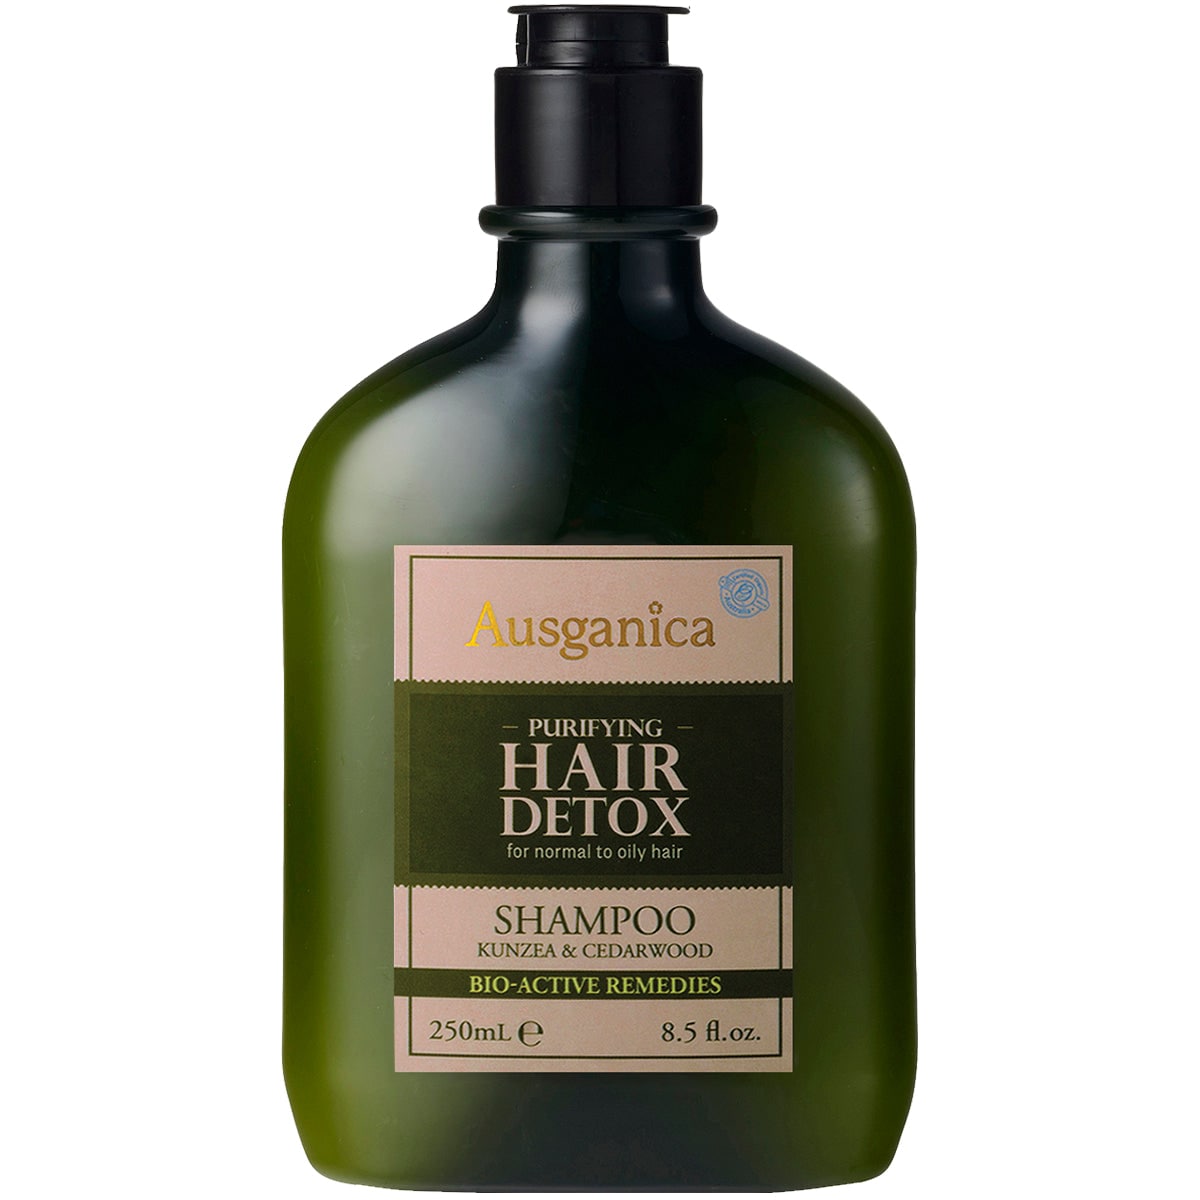 Ausganica Bio Active Remedies Detox Shampoo 250ml